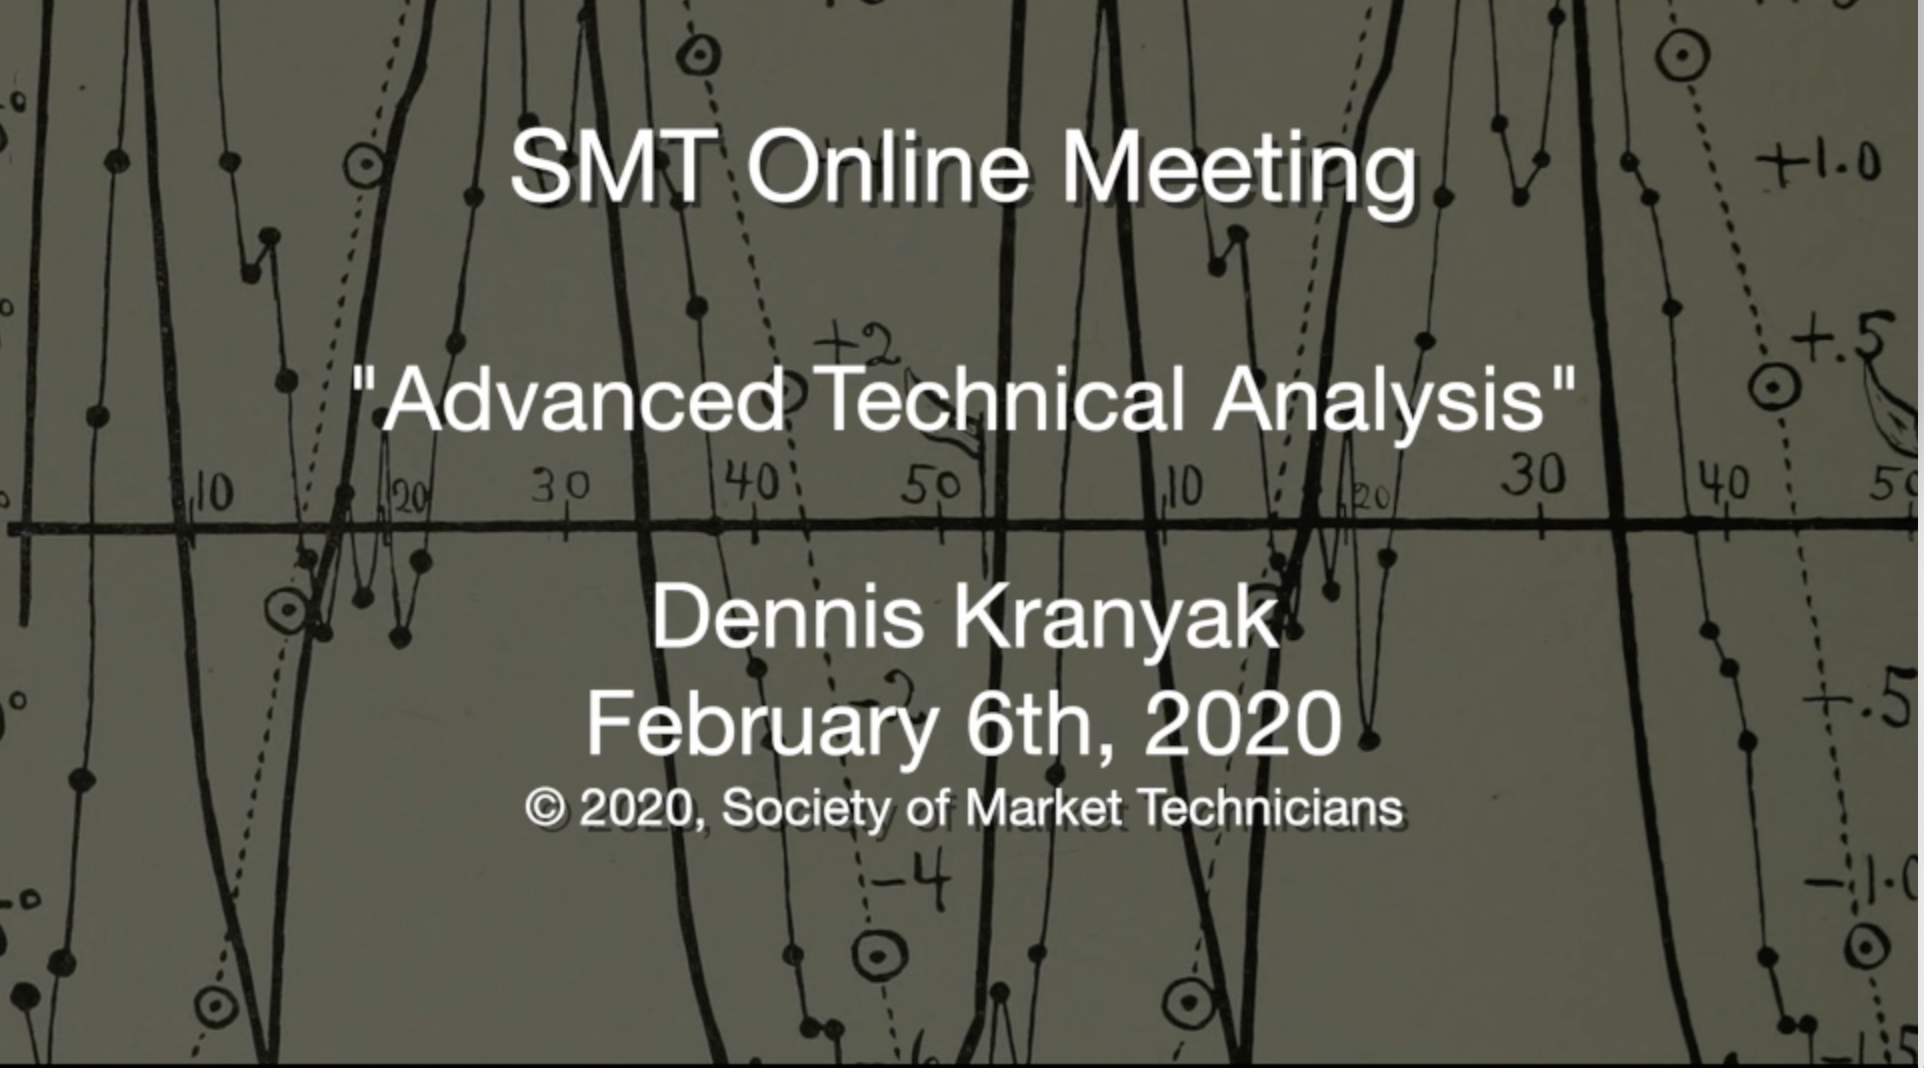 Advanced Technical Analysis